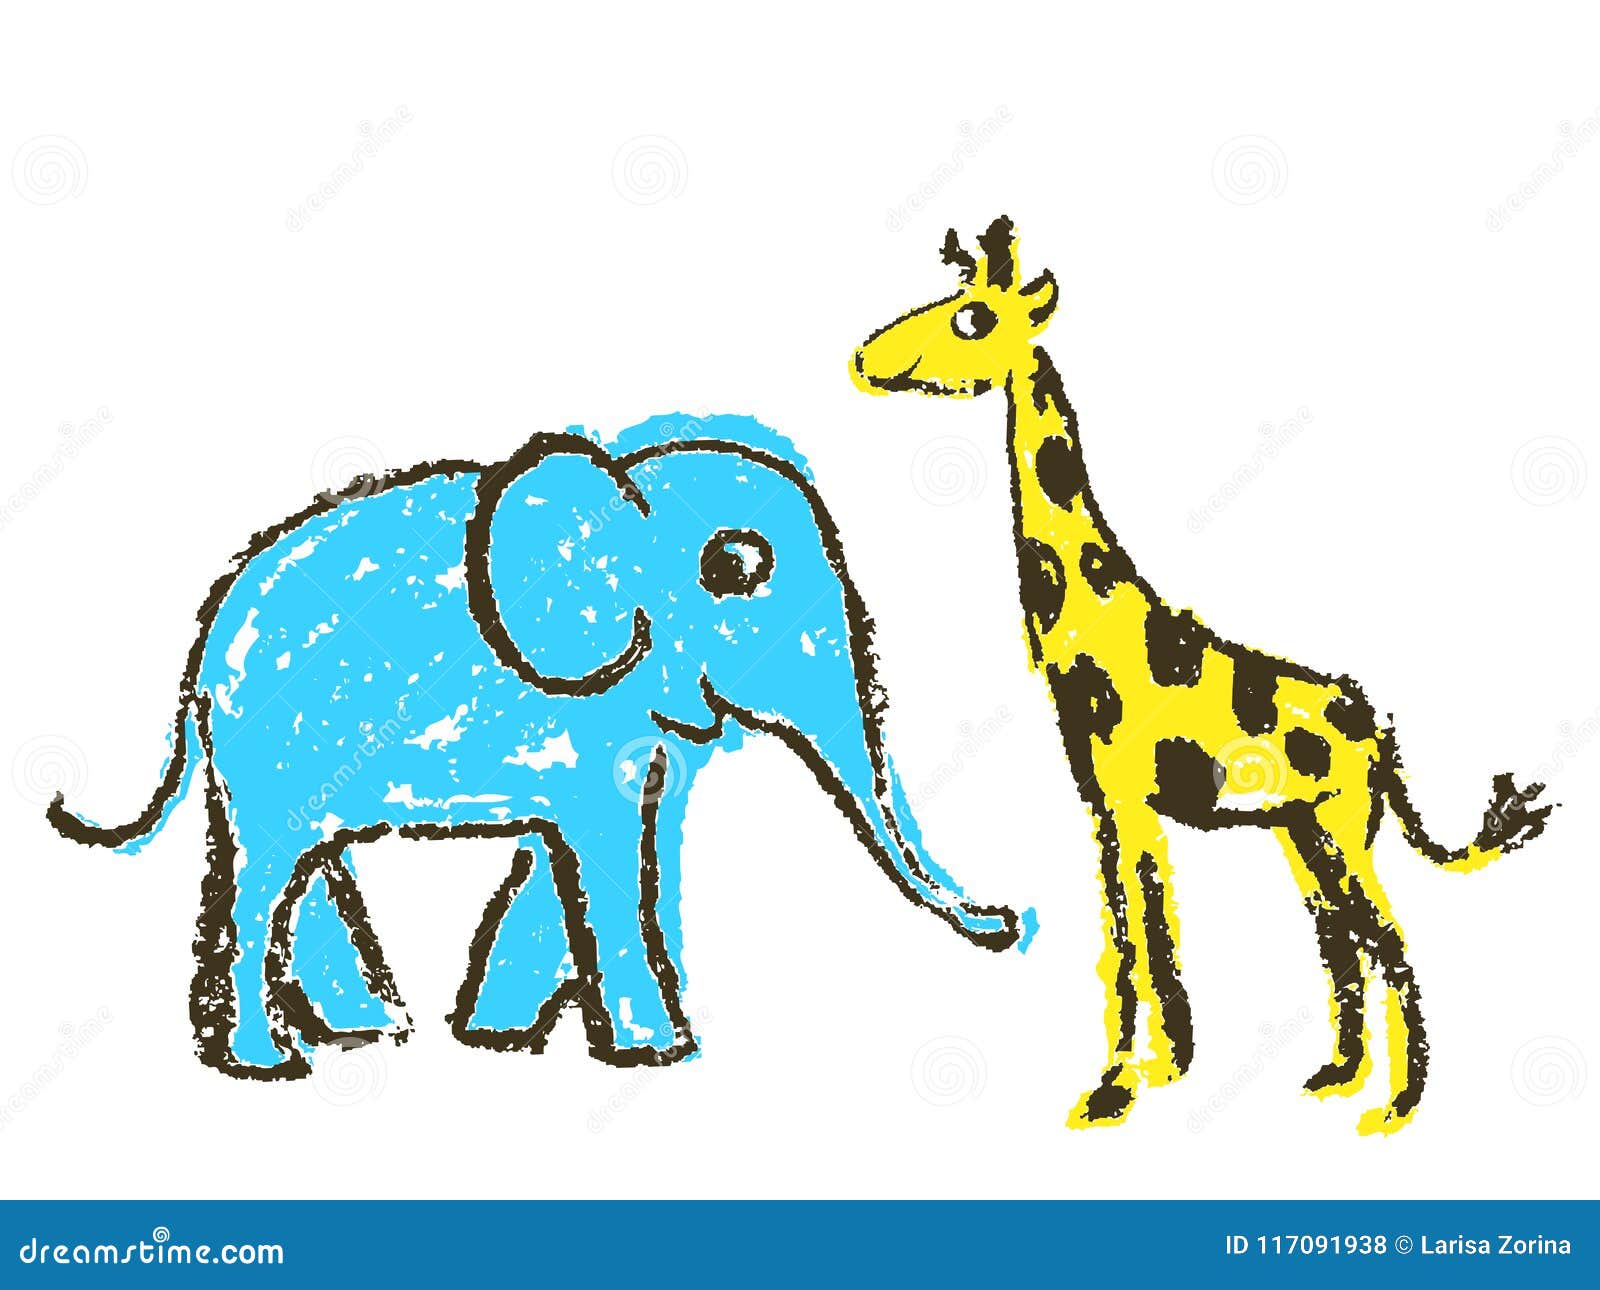 Рисование жирафа и слона